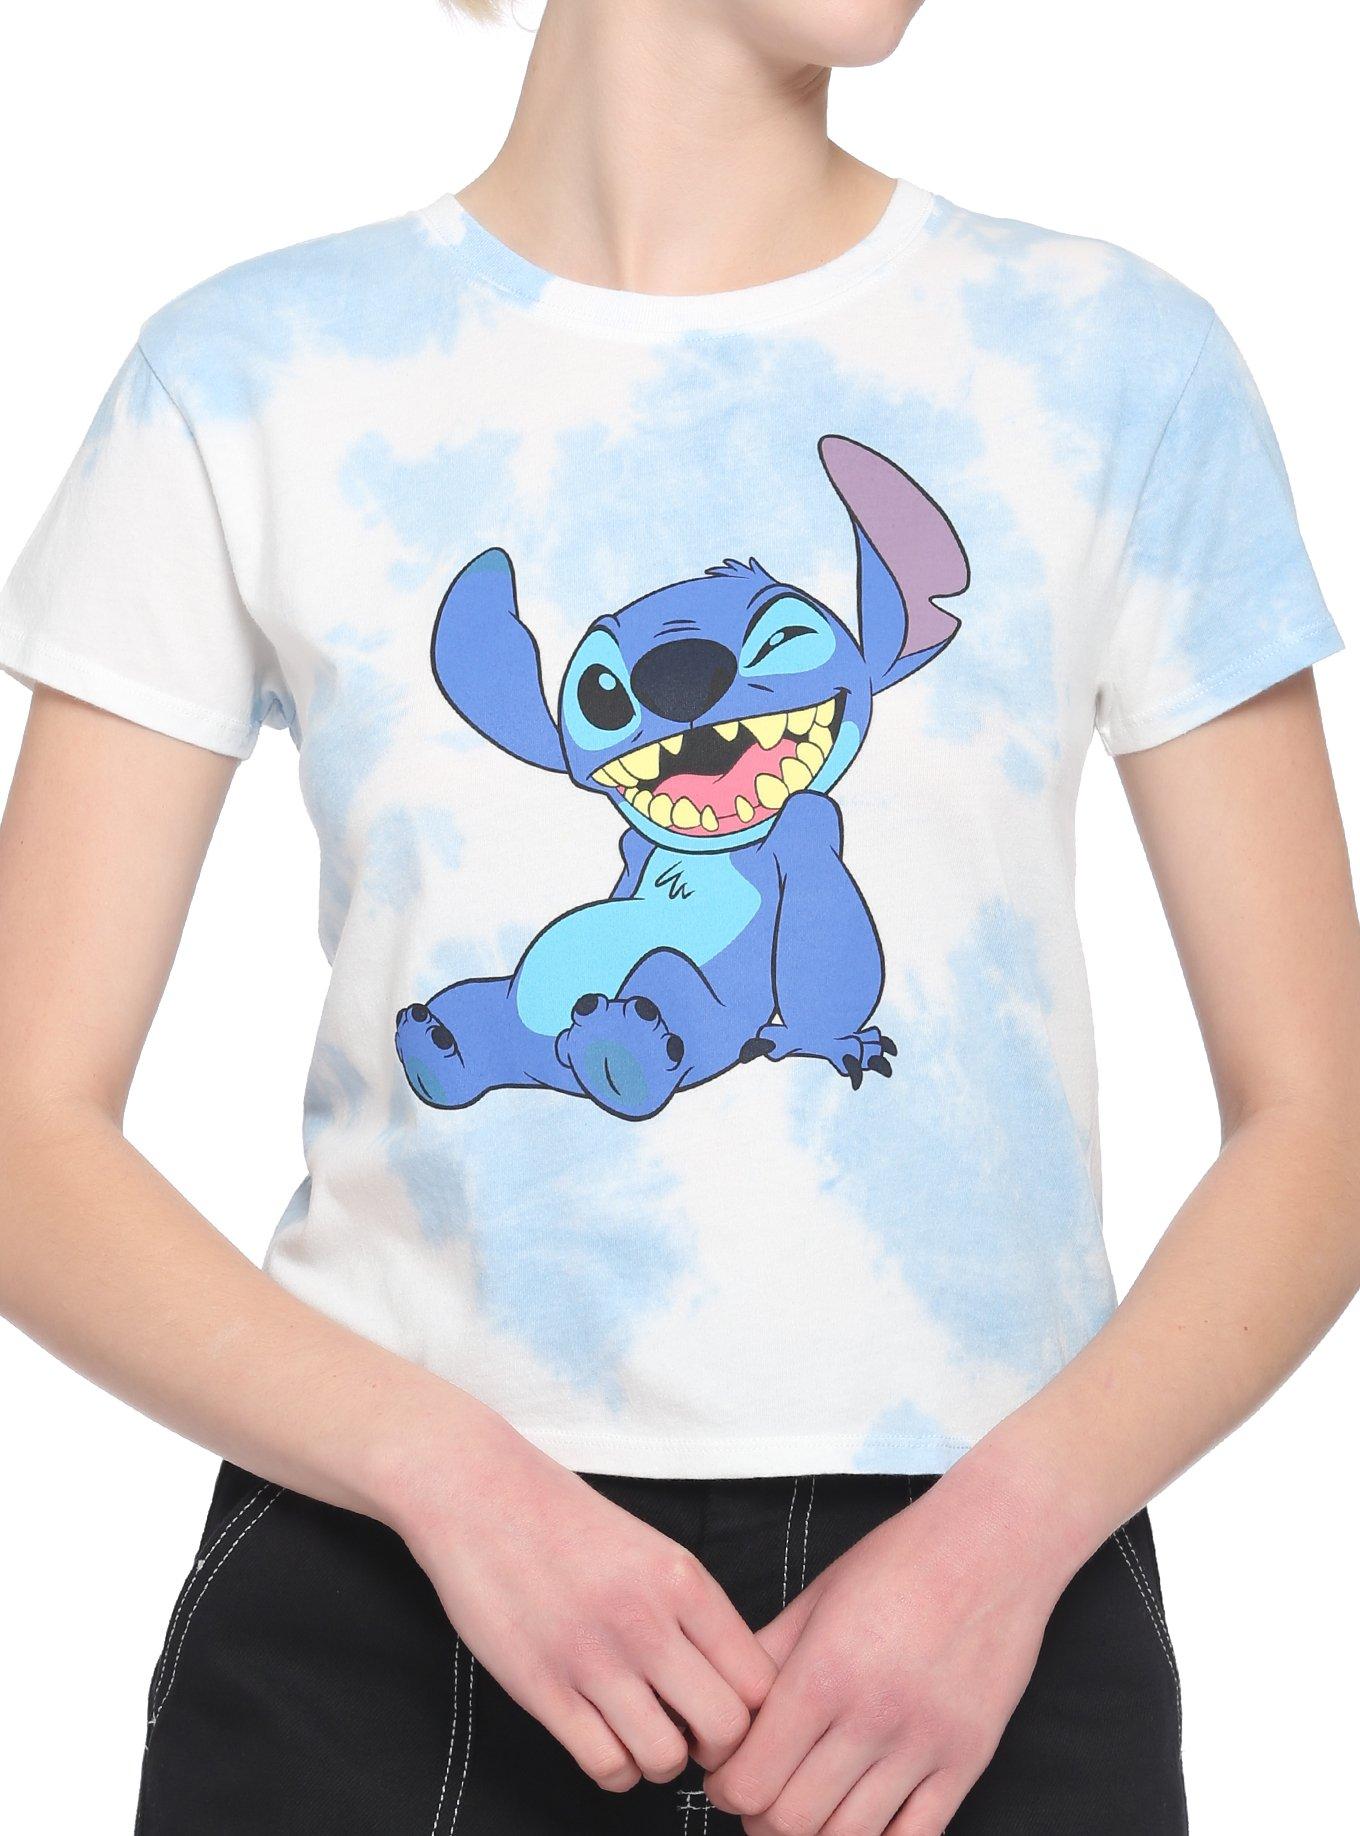 Disney Lilo & Stitch Wink Tie-Dye Girls Baby T-Shirt | Hot Topic